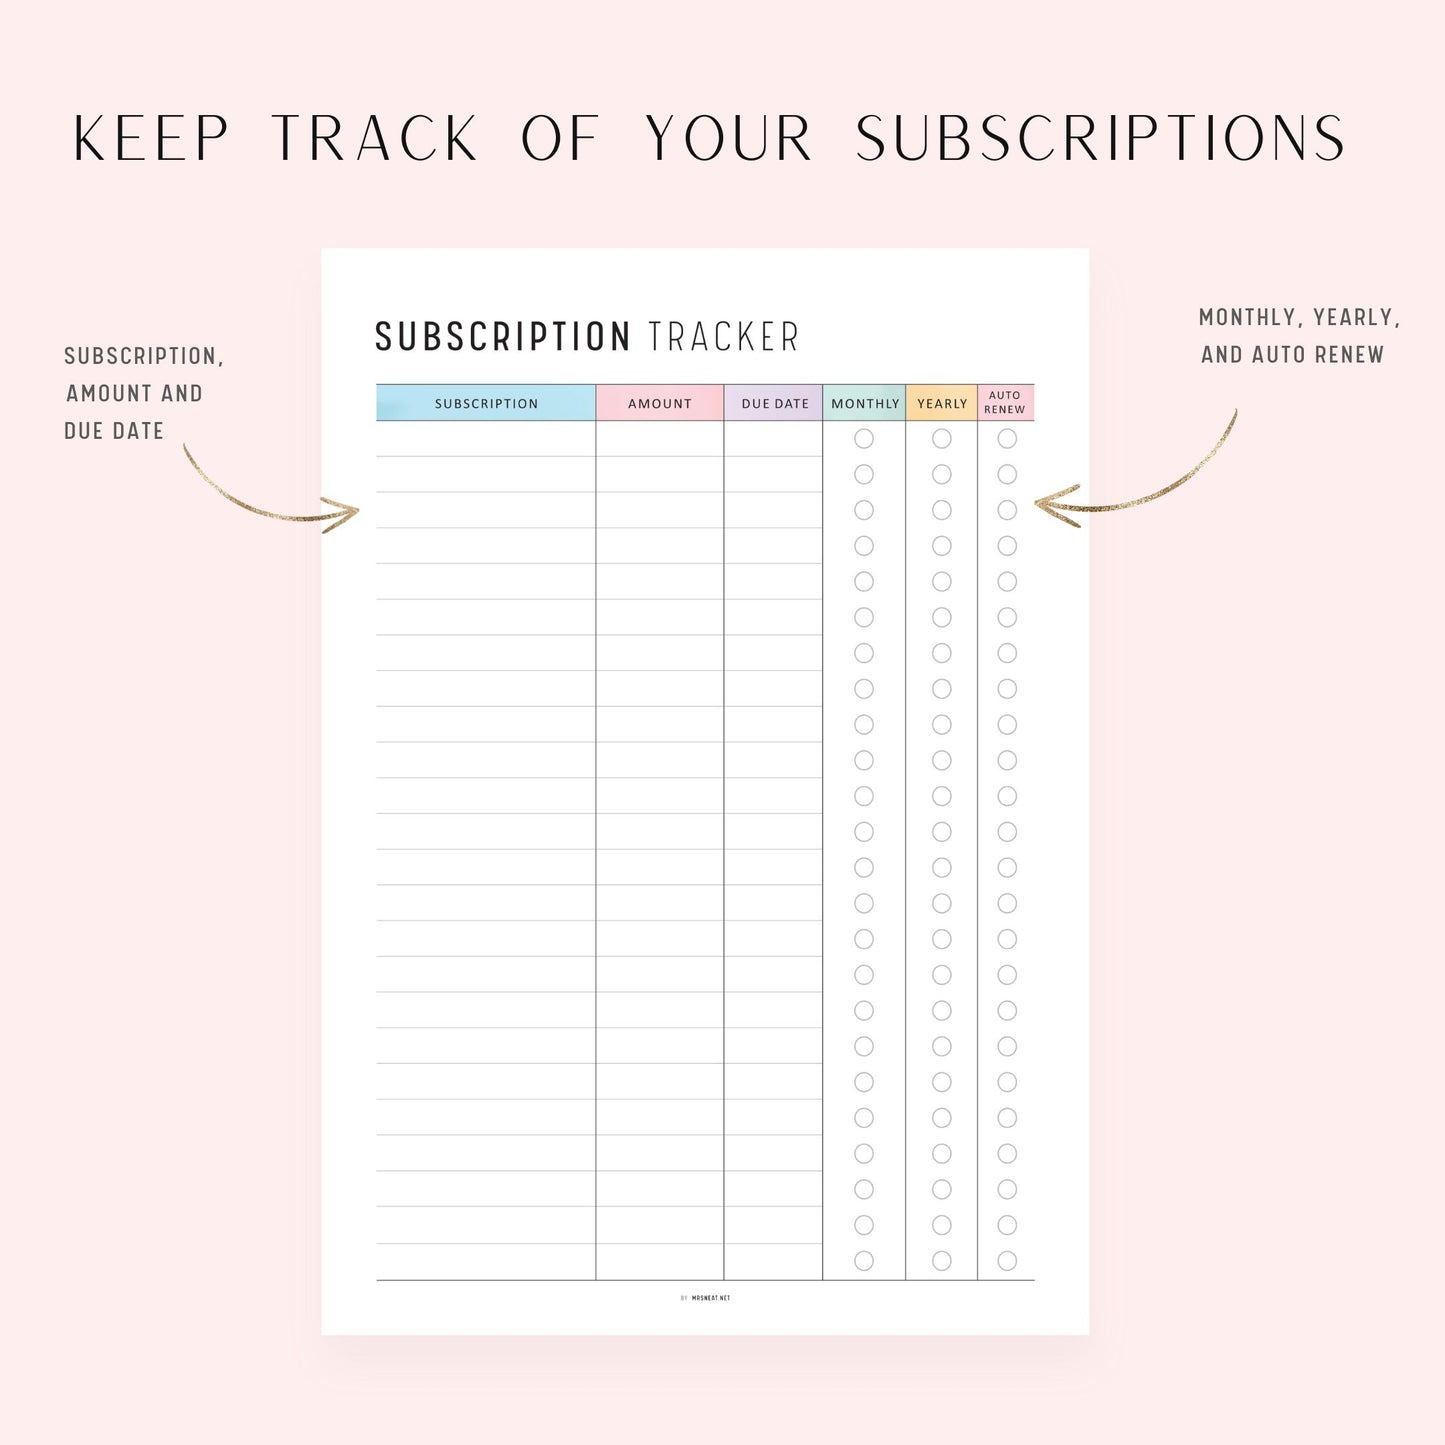 Subscription Tracker, Printable, A4, A5, Letter, Half Letter, PDF, Digital Planner, 2 Colors